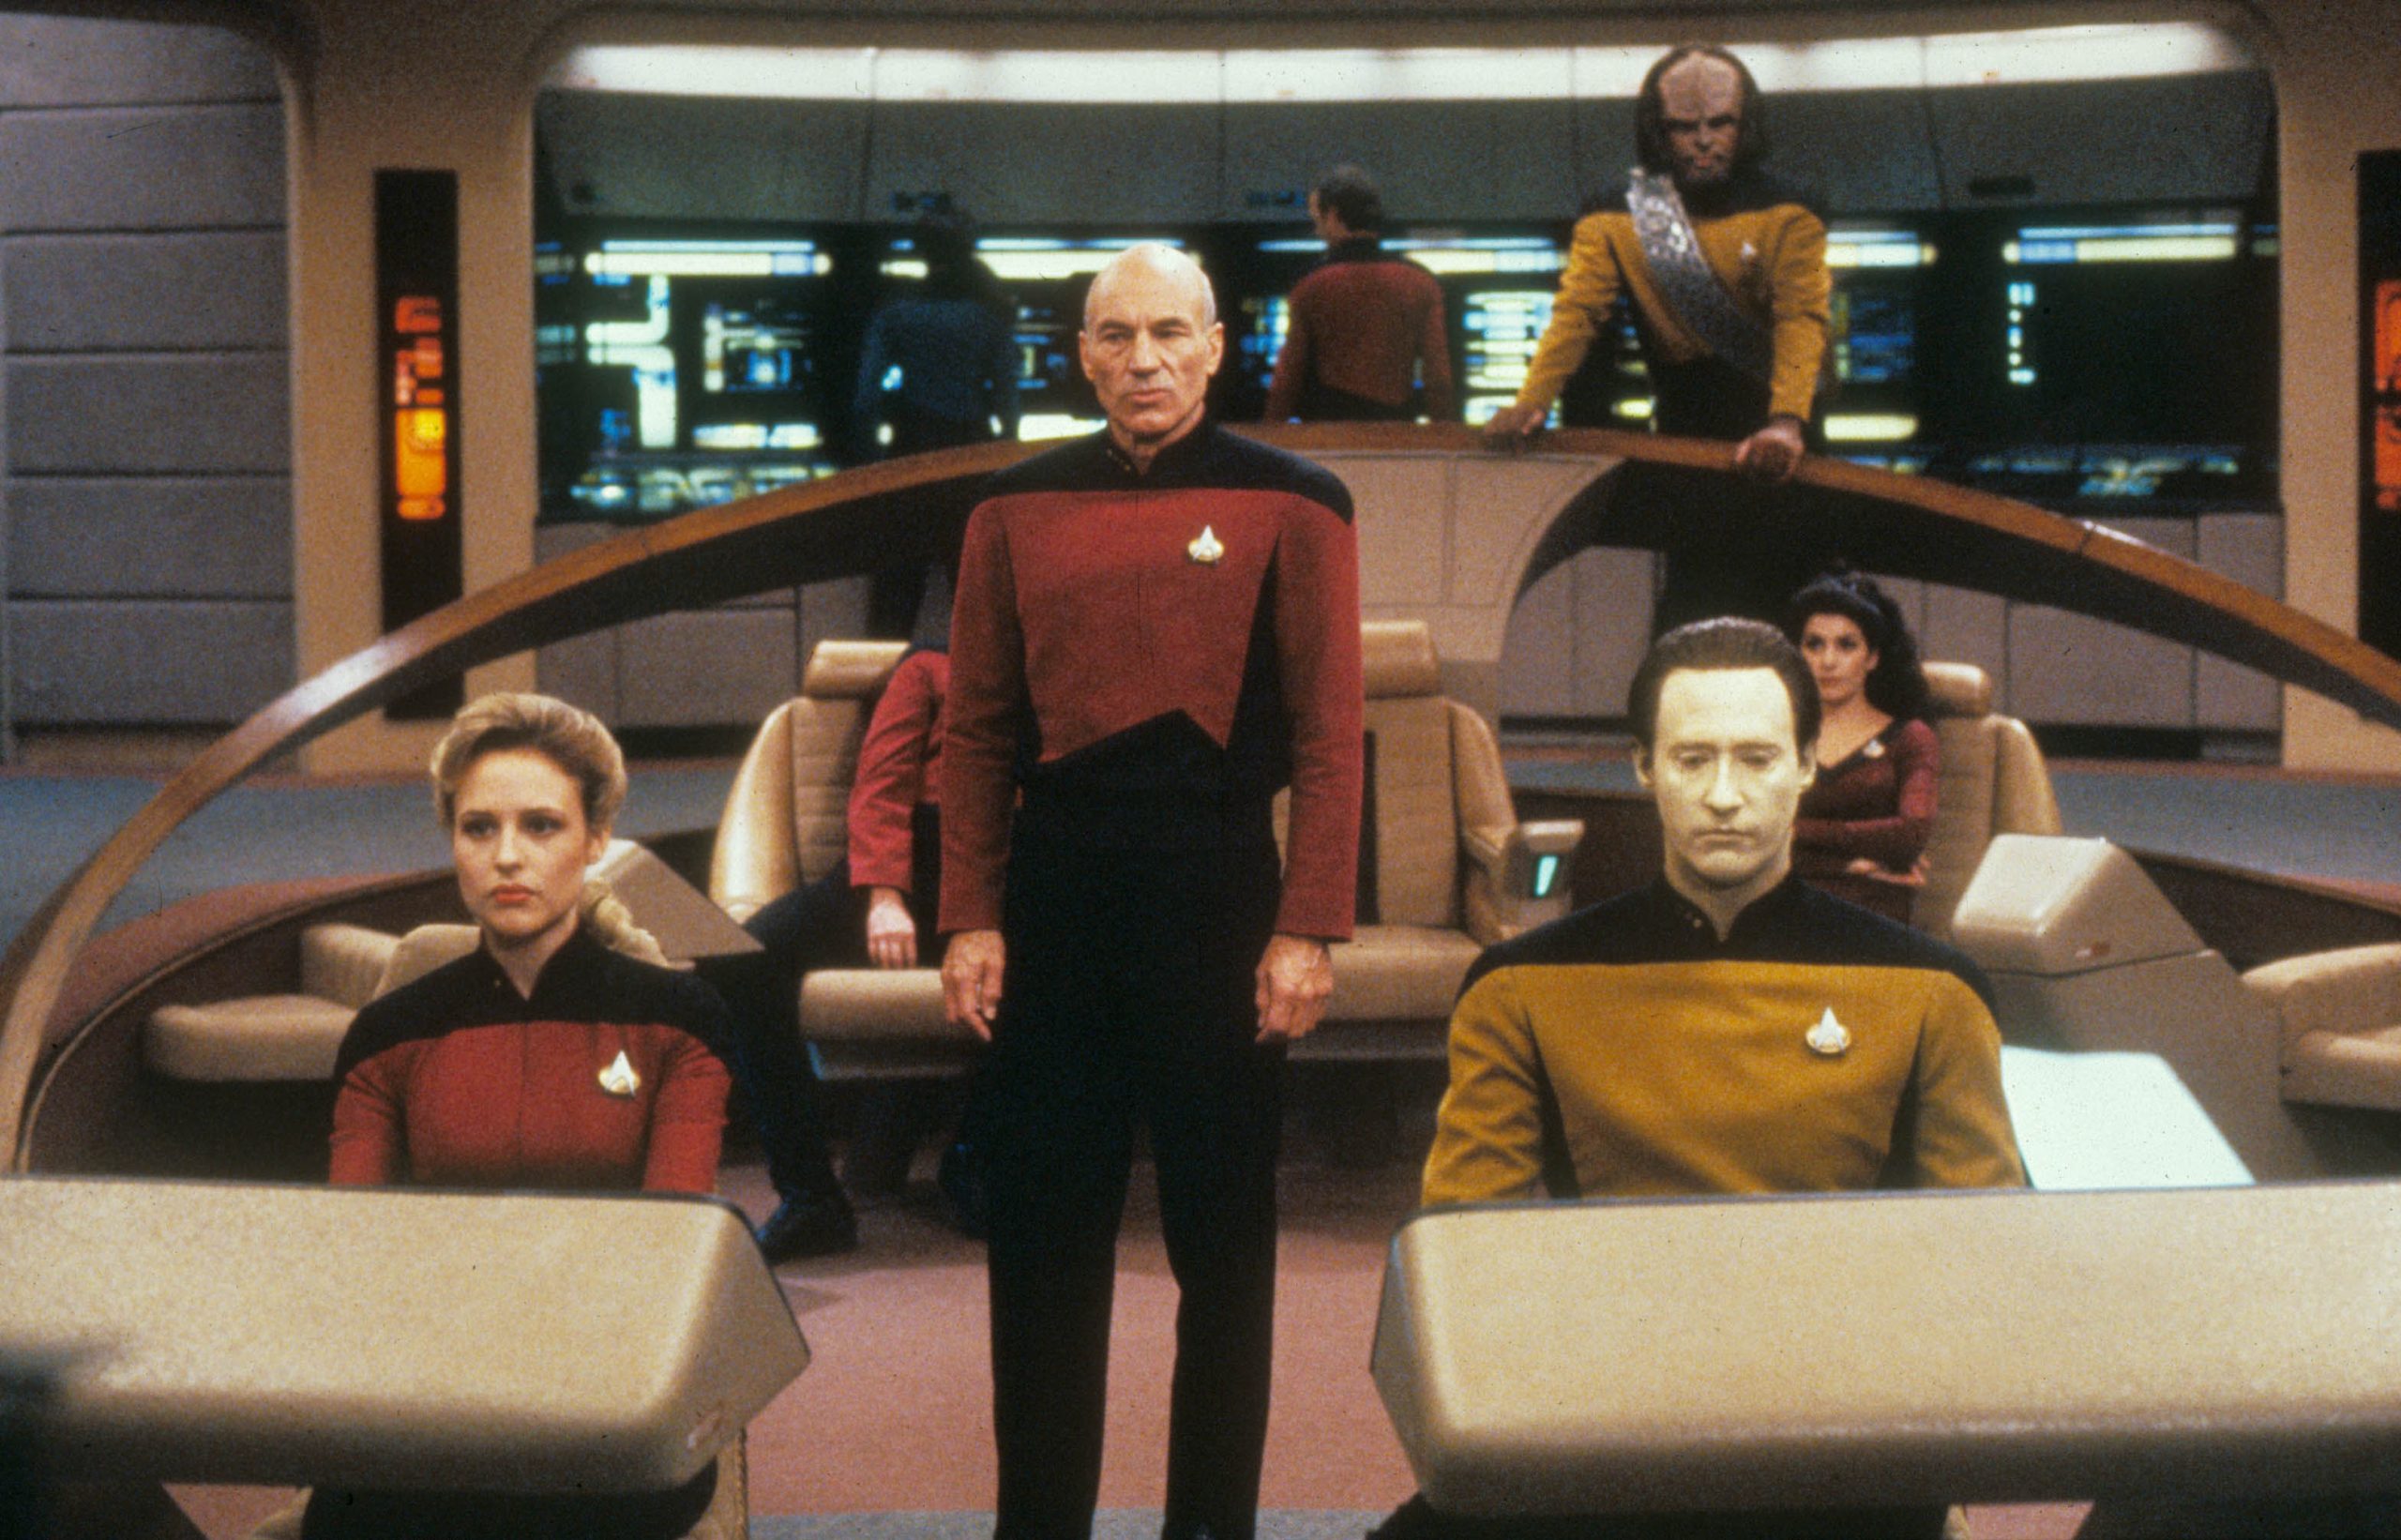 A Forthcoming Museum Is Centered on a Restored ‘Star Trek’ Enterprise Bridge - artnet News